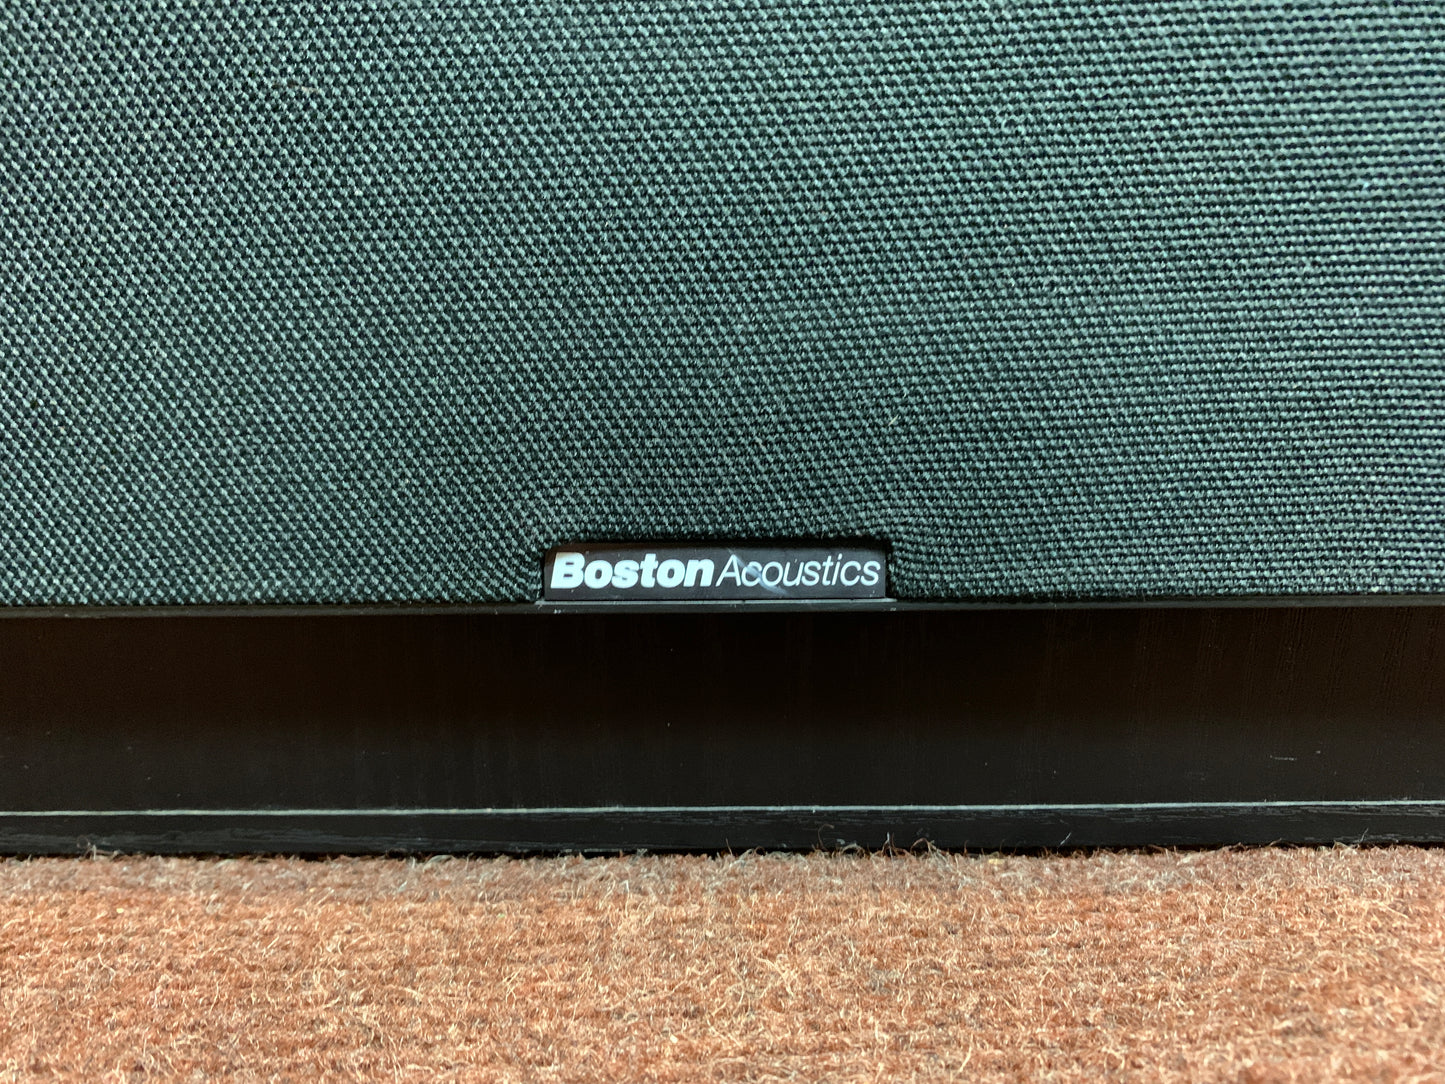 Boston Acoustics A120 Speakers